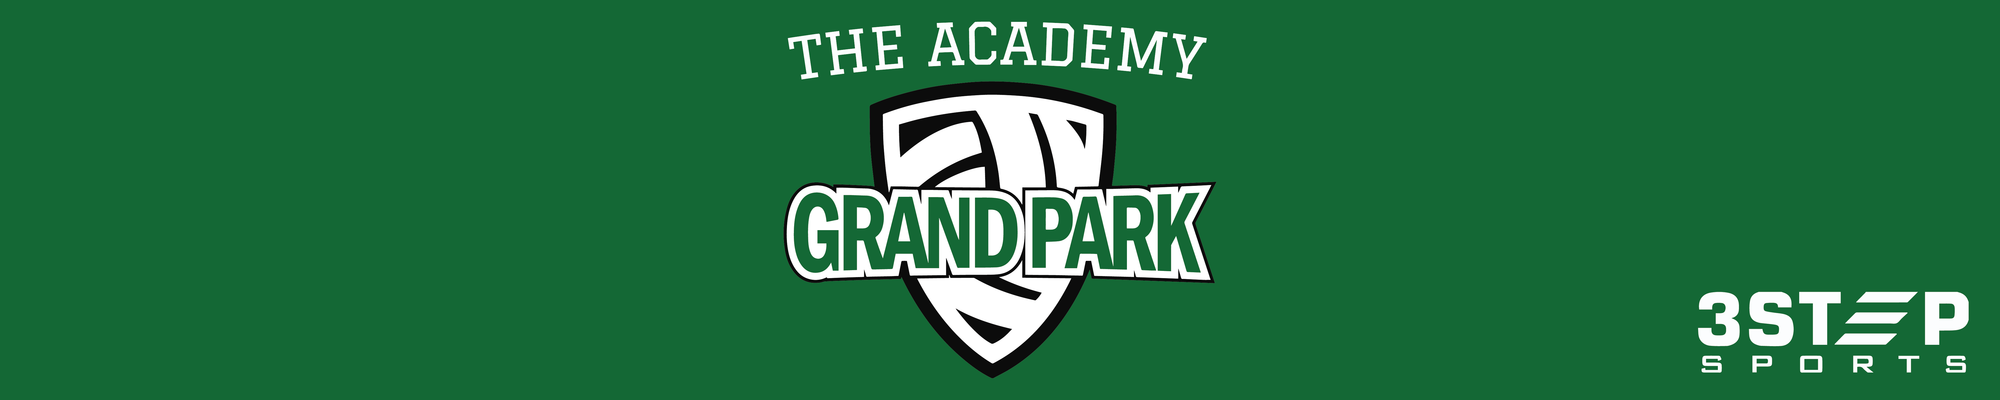 Academy Grand Park